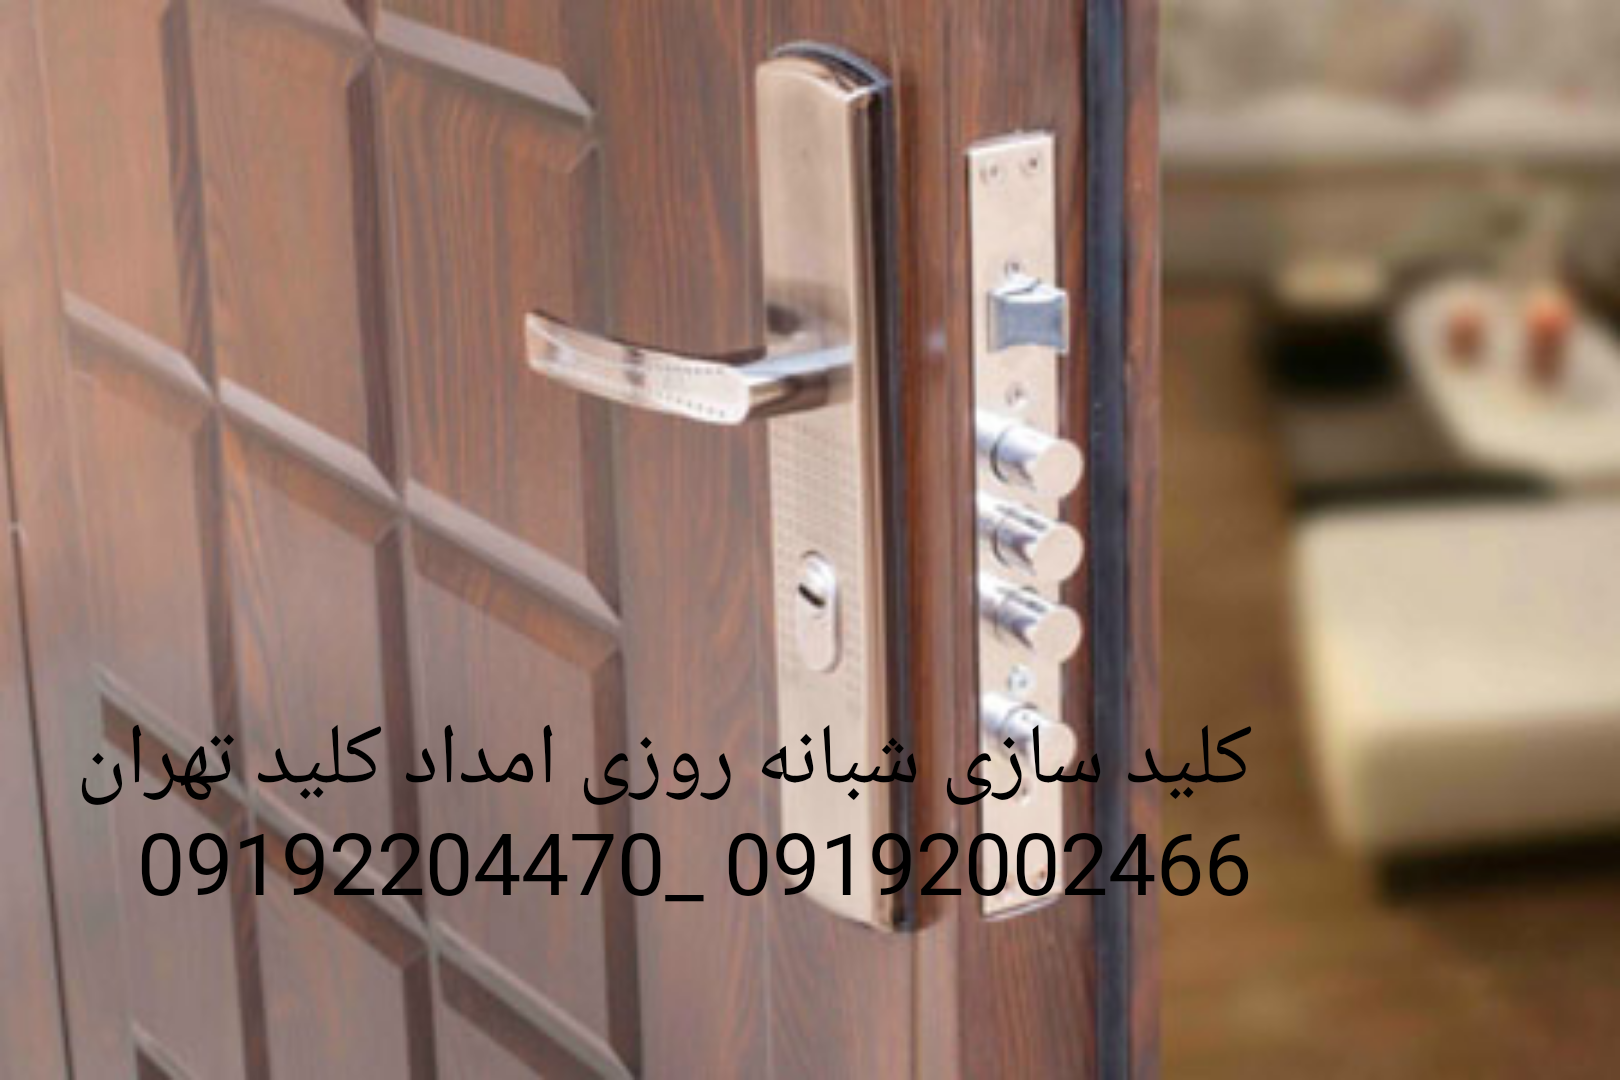 کلید سازي شبانه روزي امداد کلید تهران 09192002466 